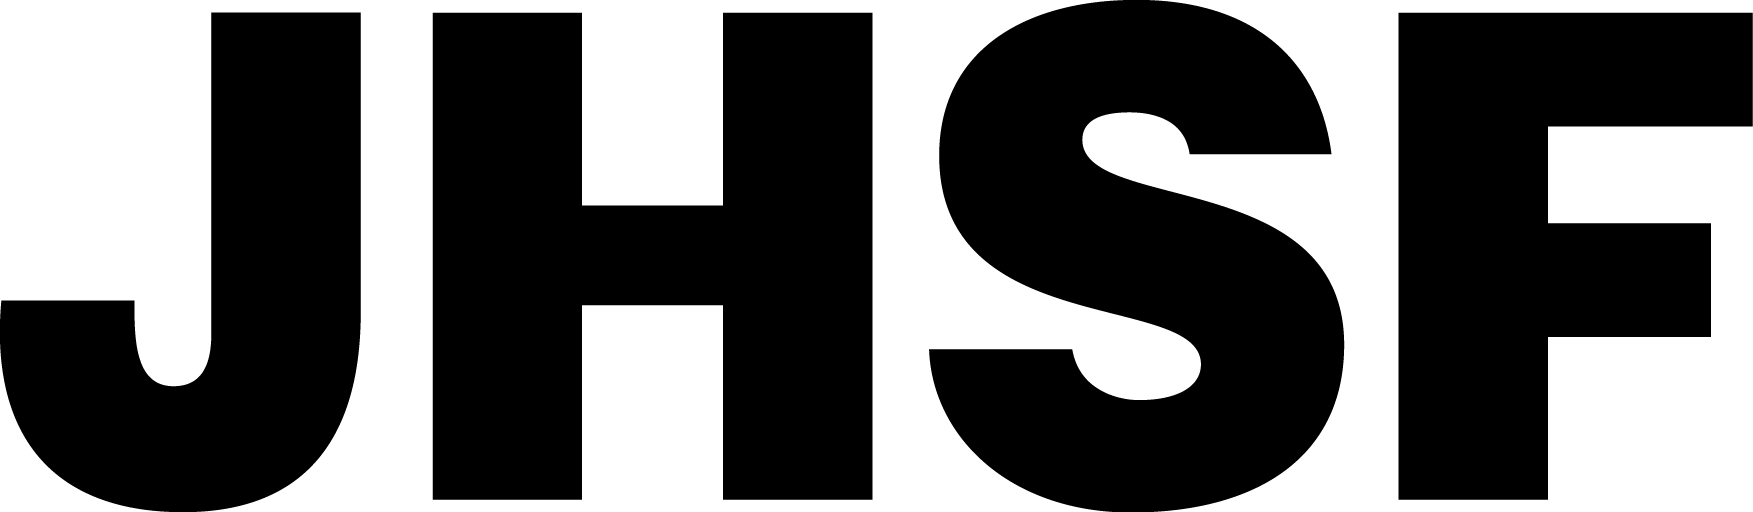 Logotipo Jhsf em fundo branco.